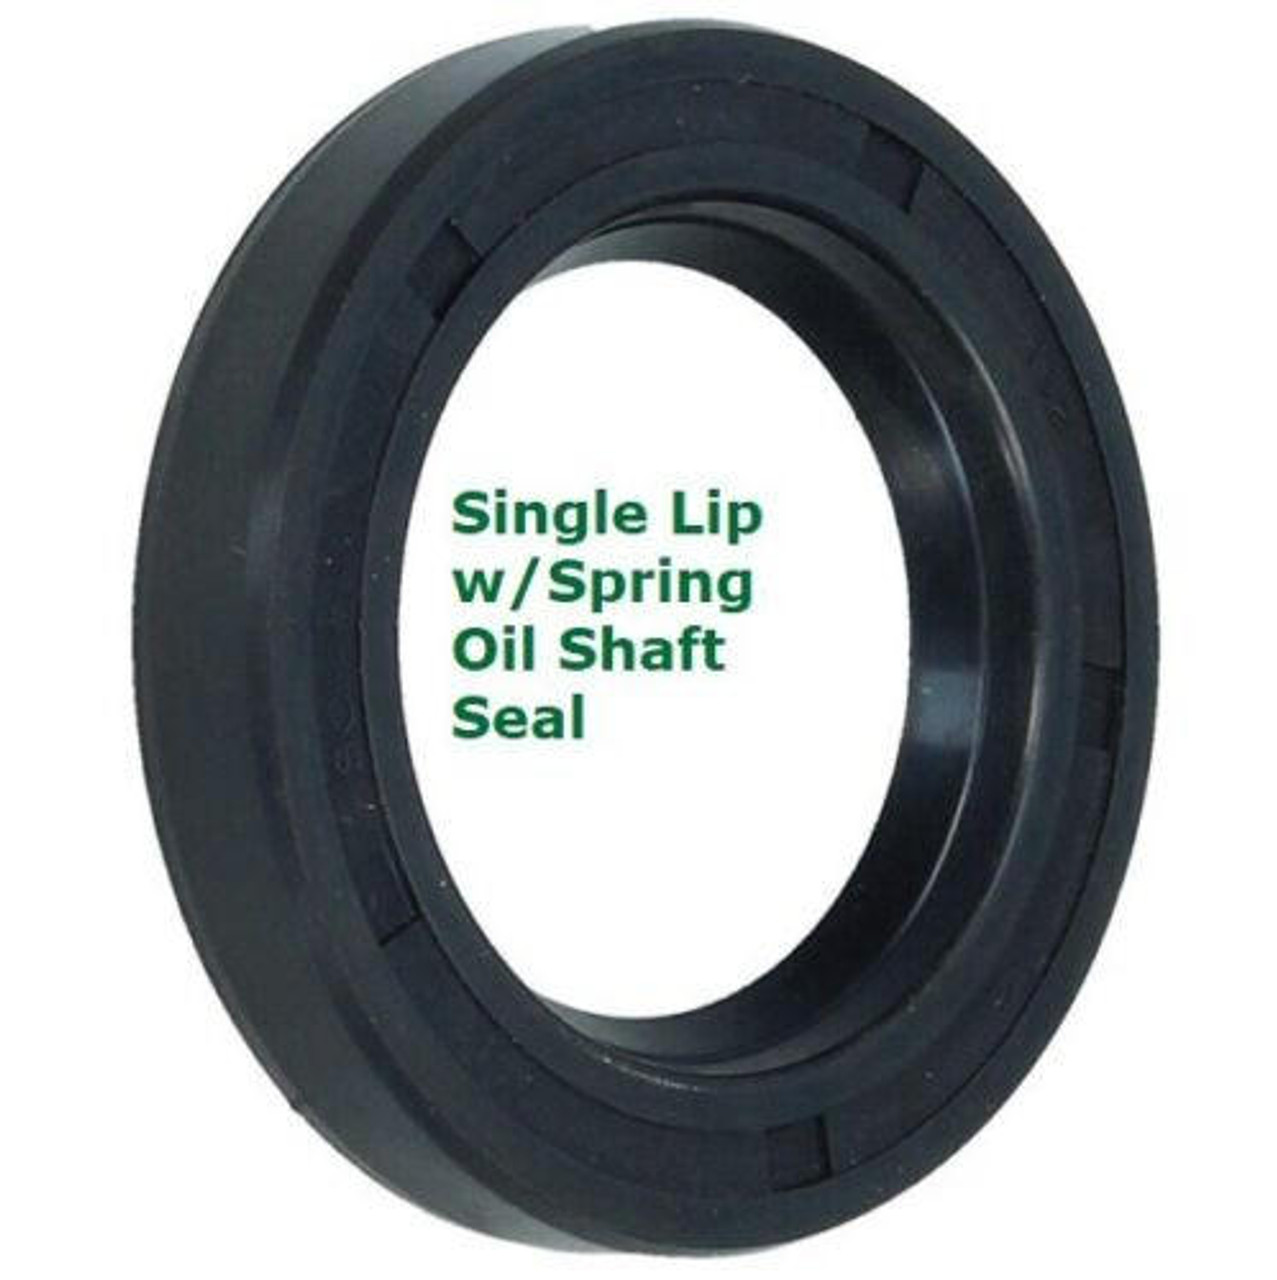 Metric Oil Shaft Seal 40 x 85 x 10mm Single Lip   Price for 1 pc